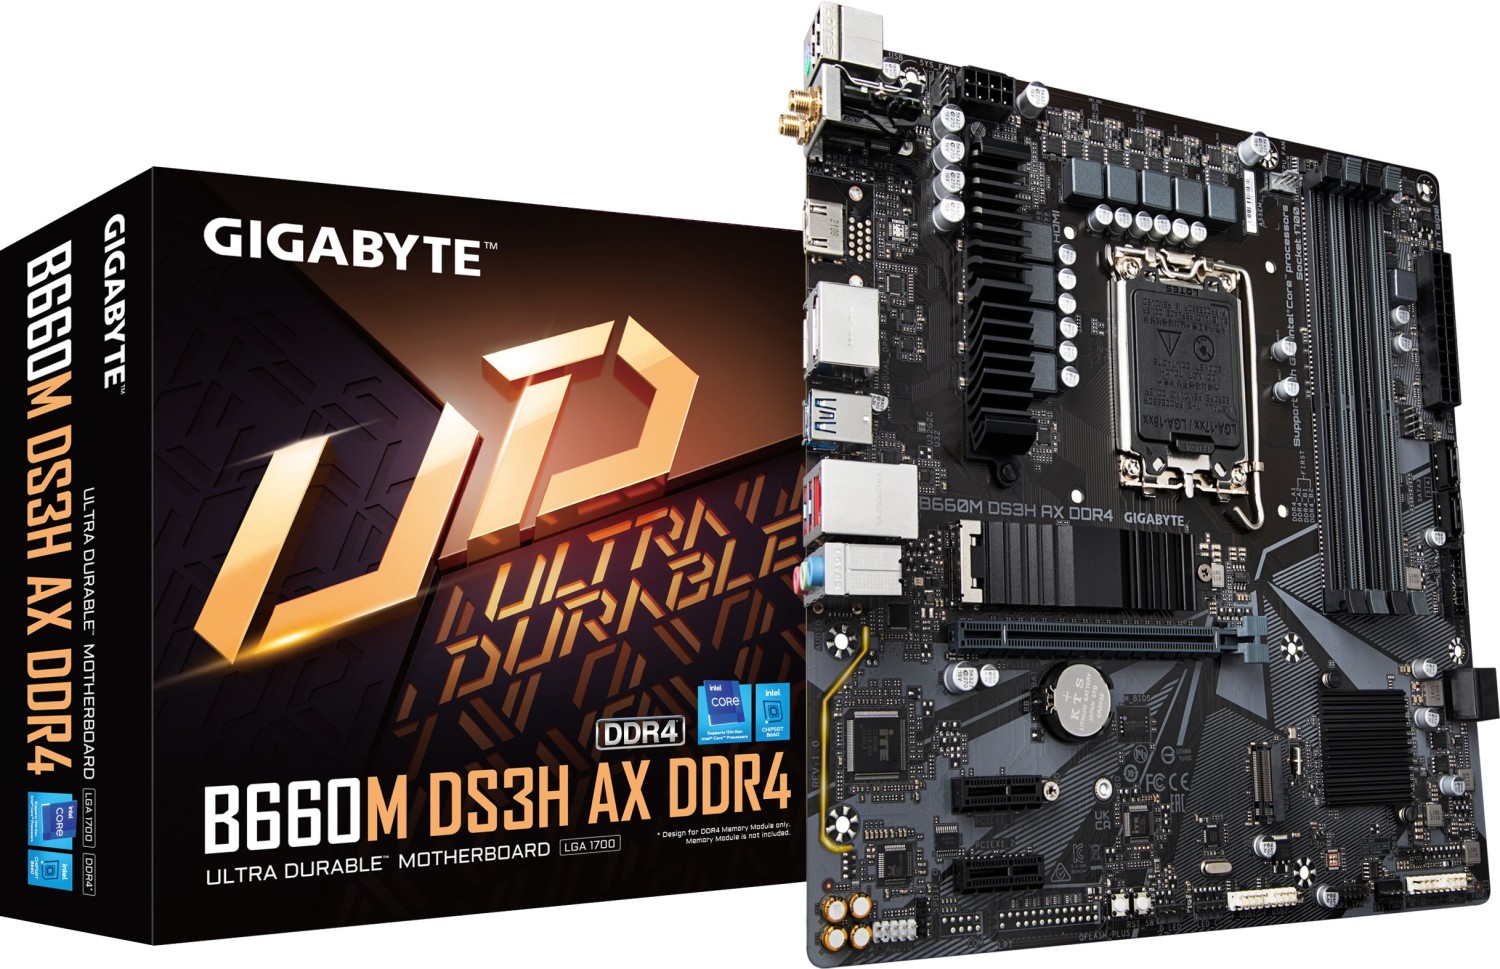 Gigabyte B660M-DS3H AX DDR4